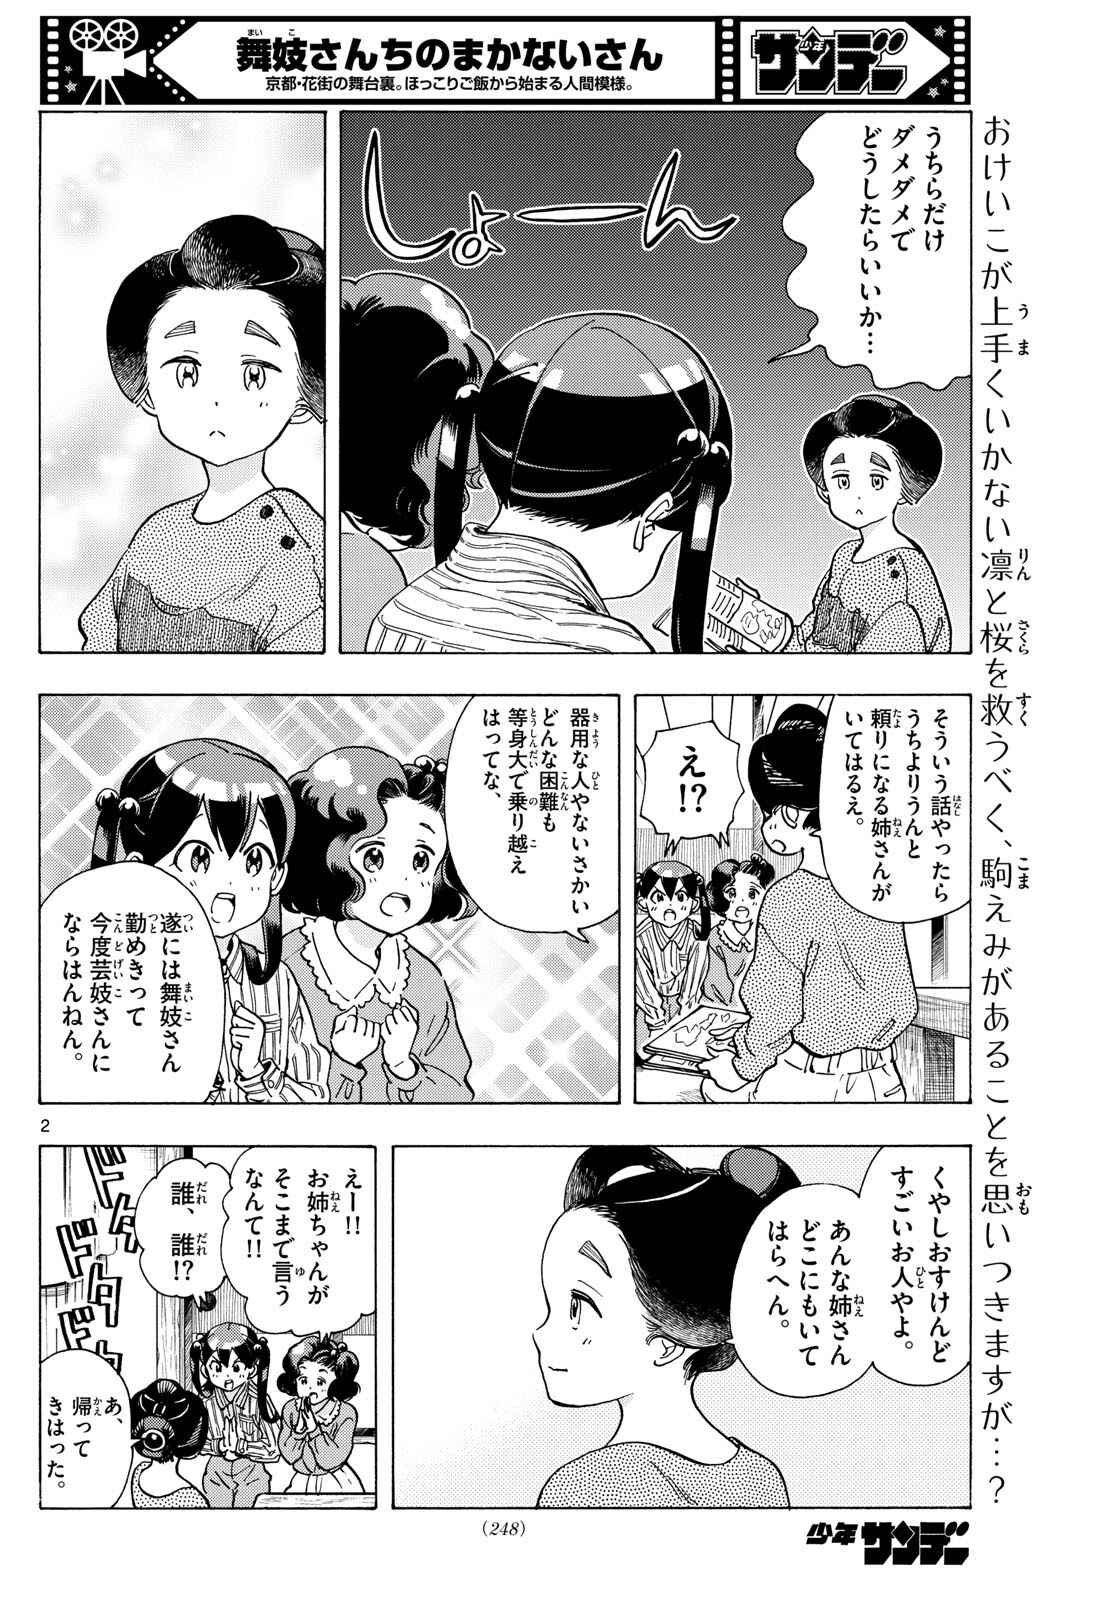 Maiko-san Chi no Makanai-san - Chapter 291 - Page 2